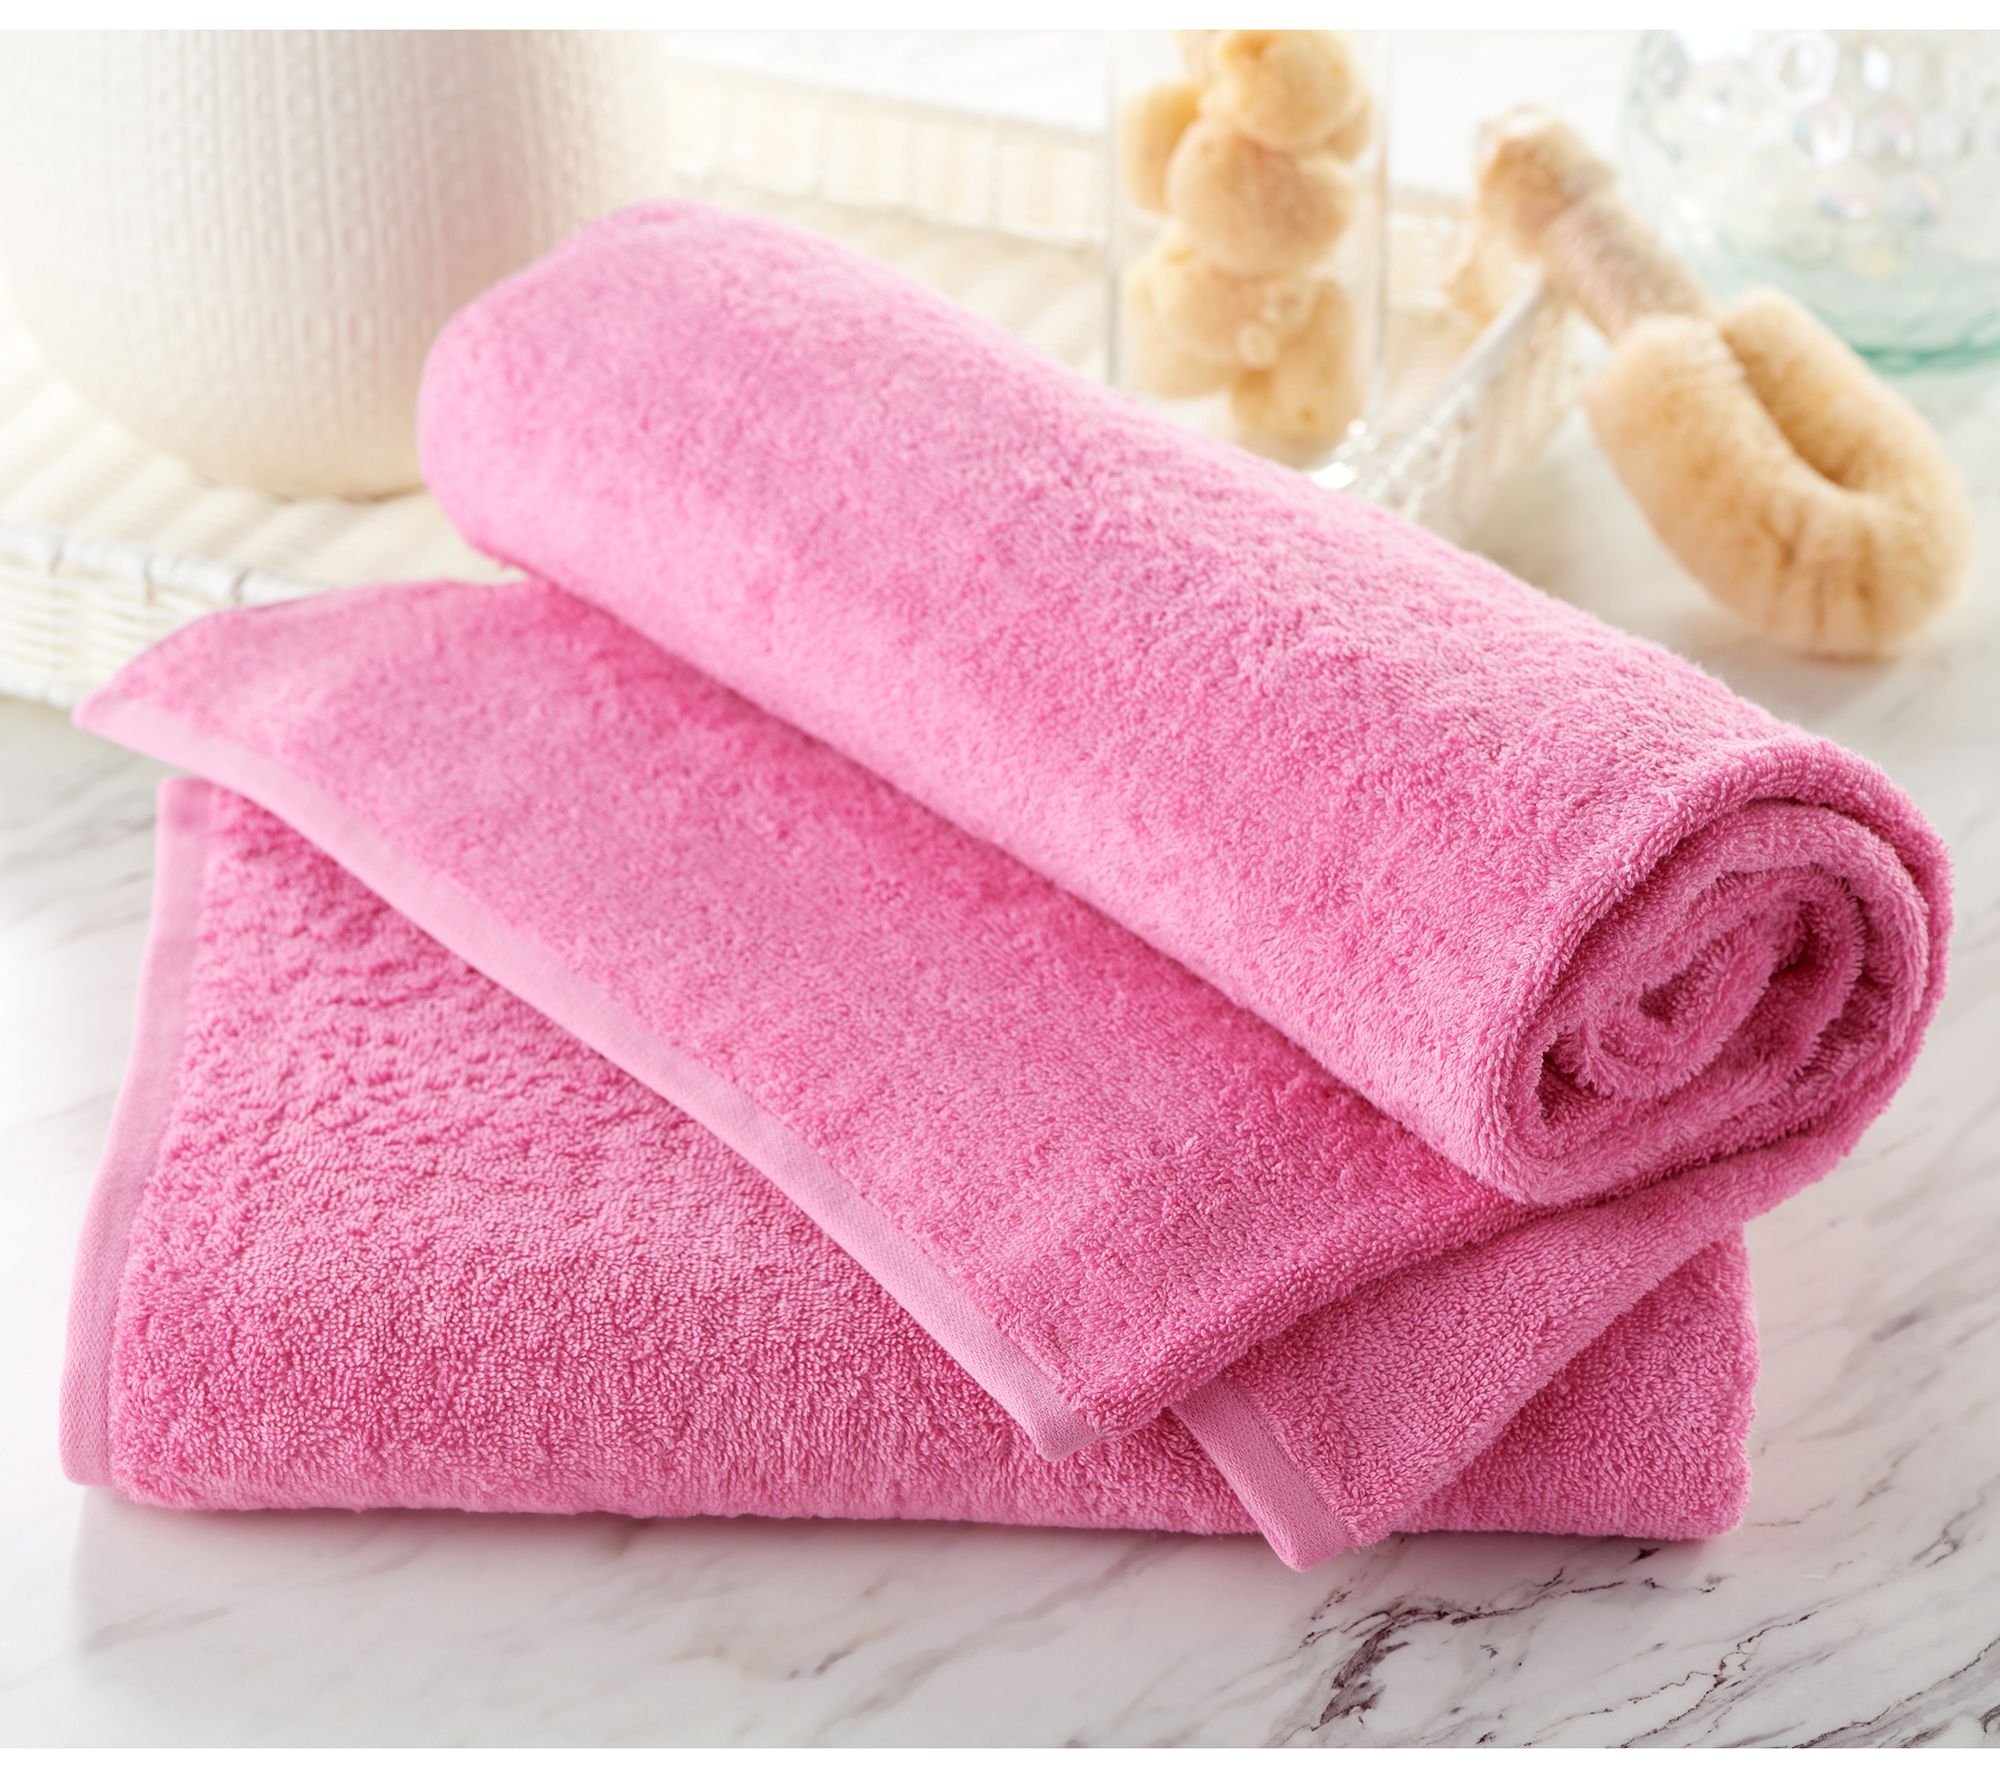 Northern Nights Egyptian Cotton 2-pc Bath Sheet Towel Set 